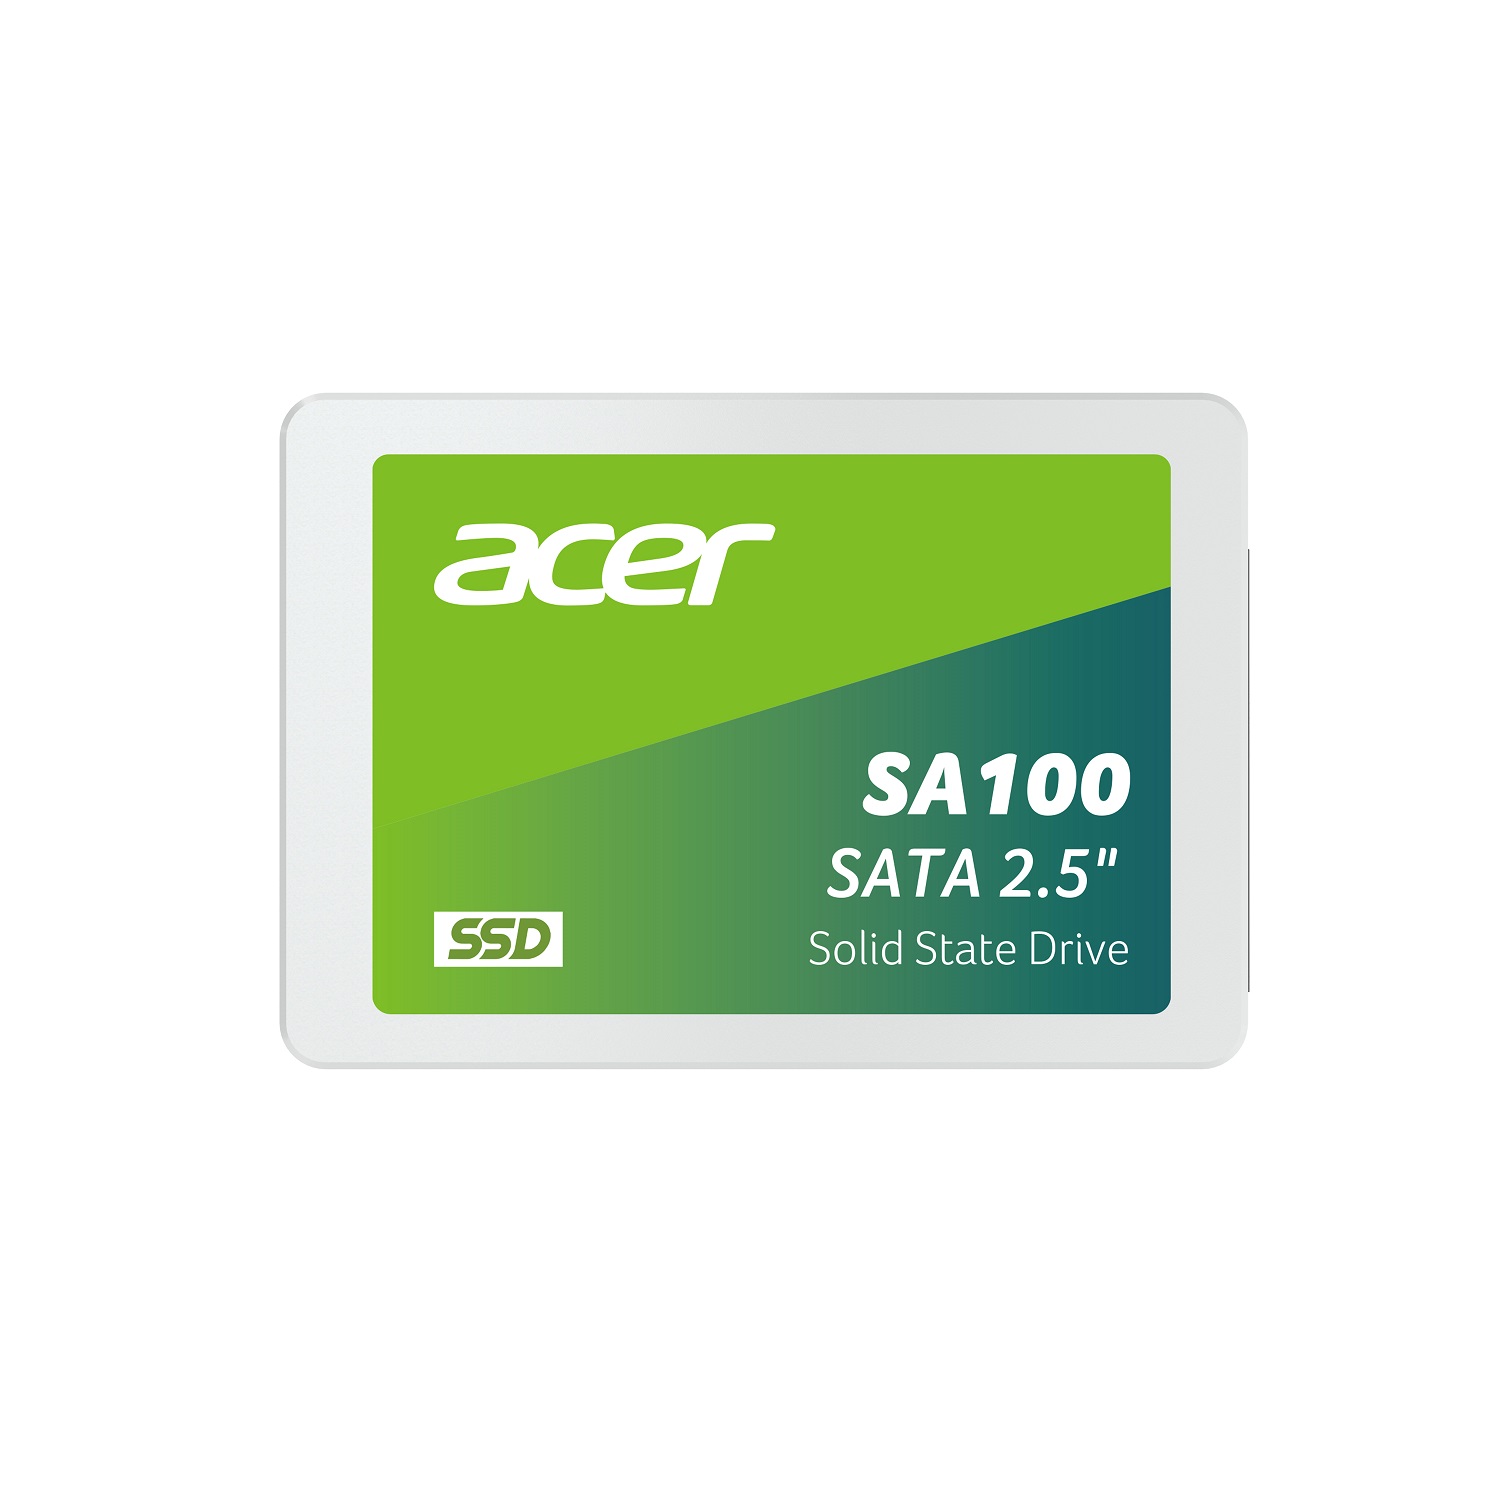 Acer SA100 BL.9BWWA.103 2.5" 480 GB SATA 3 SSD